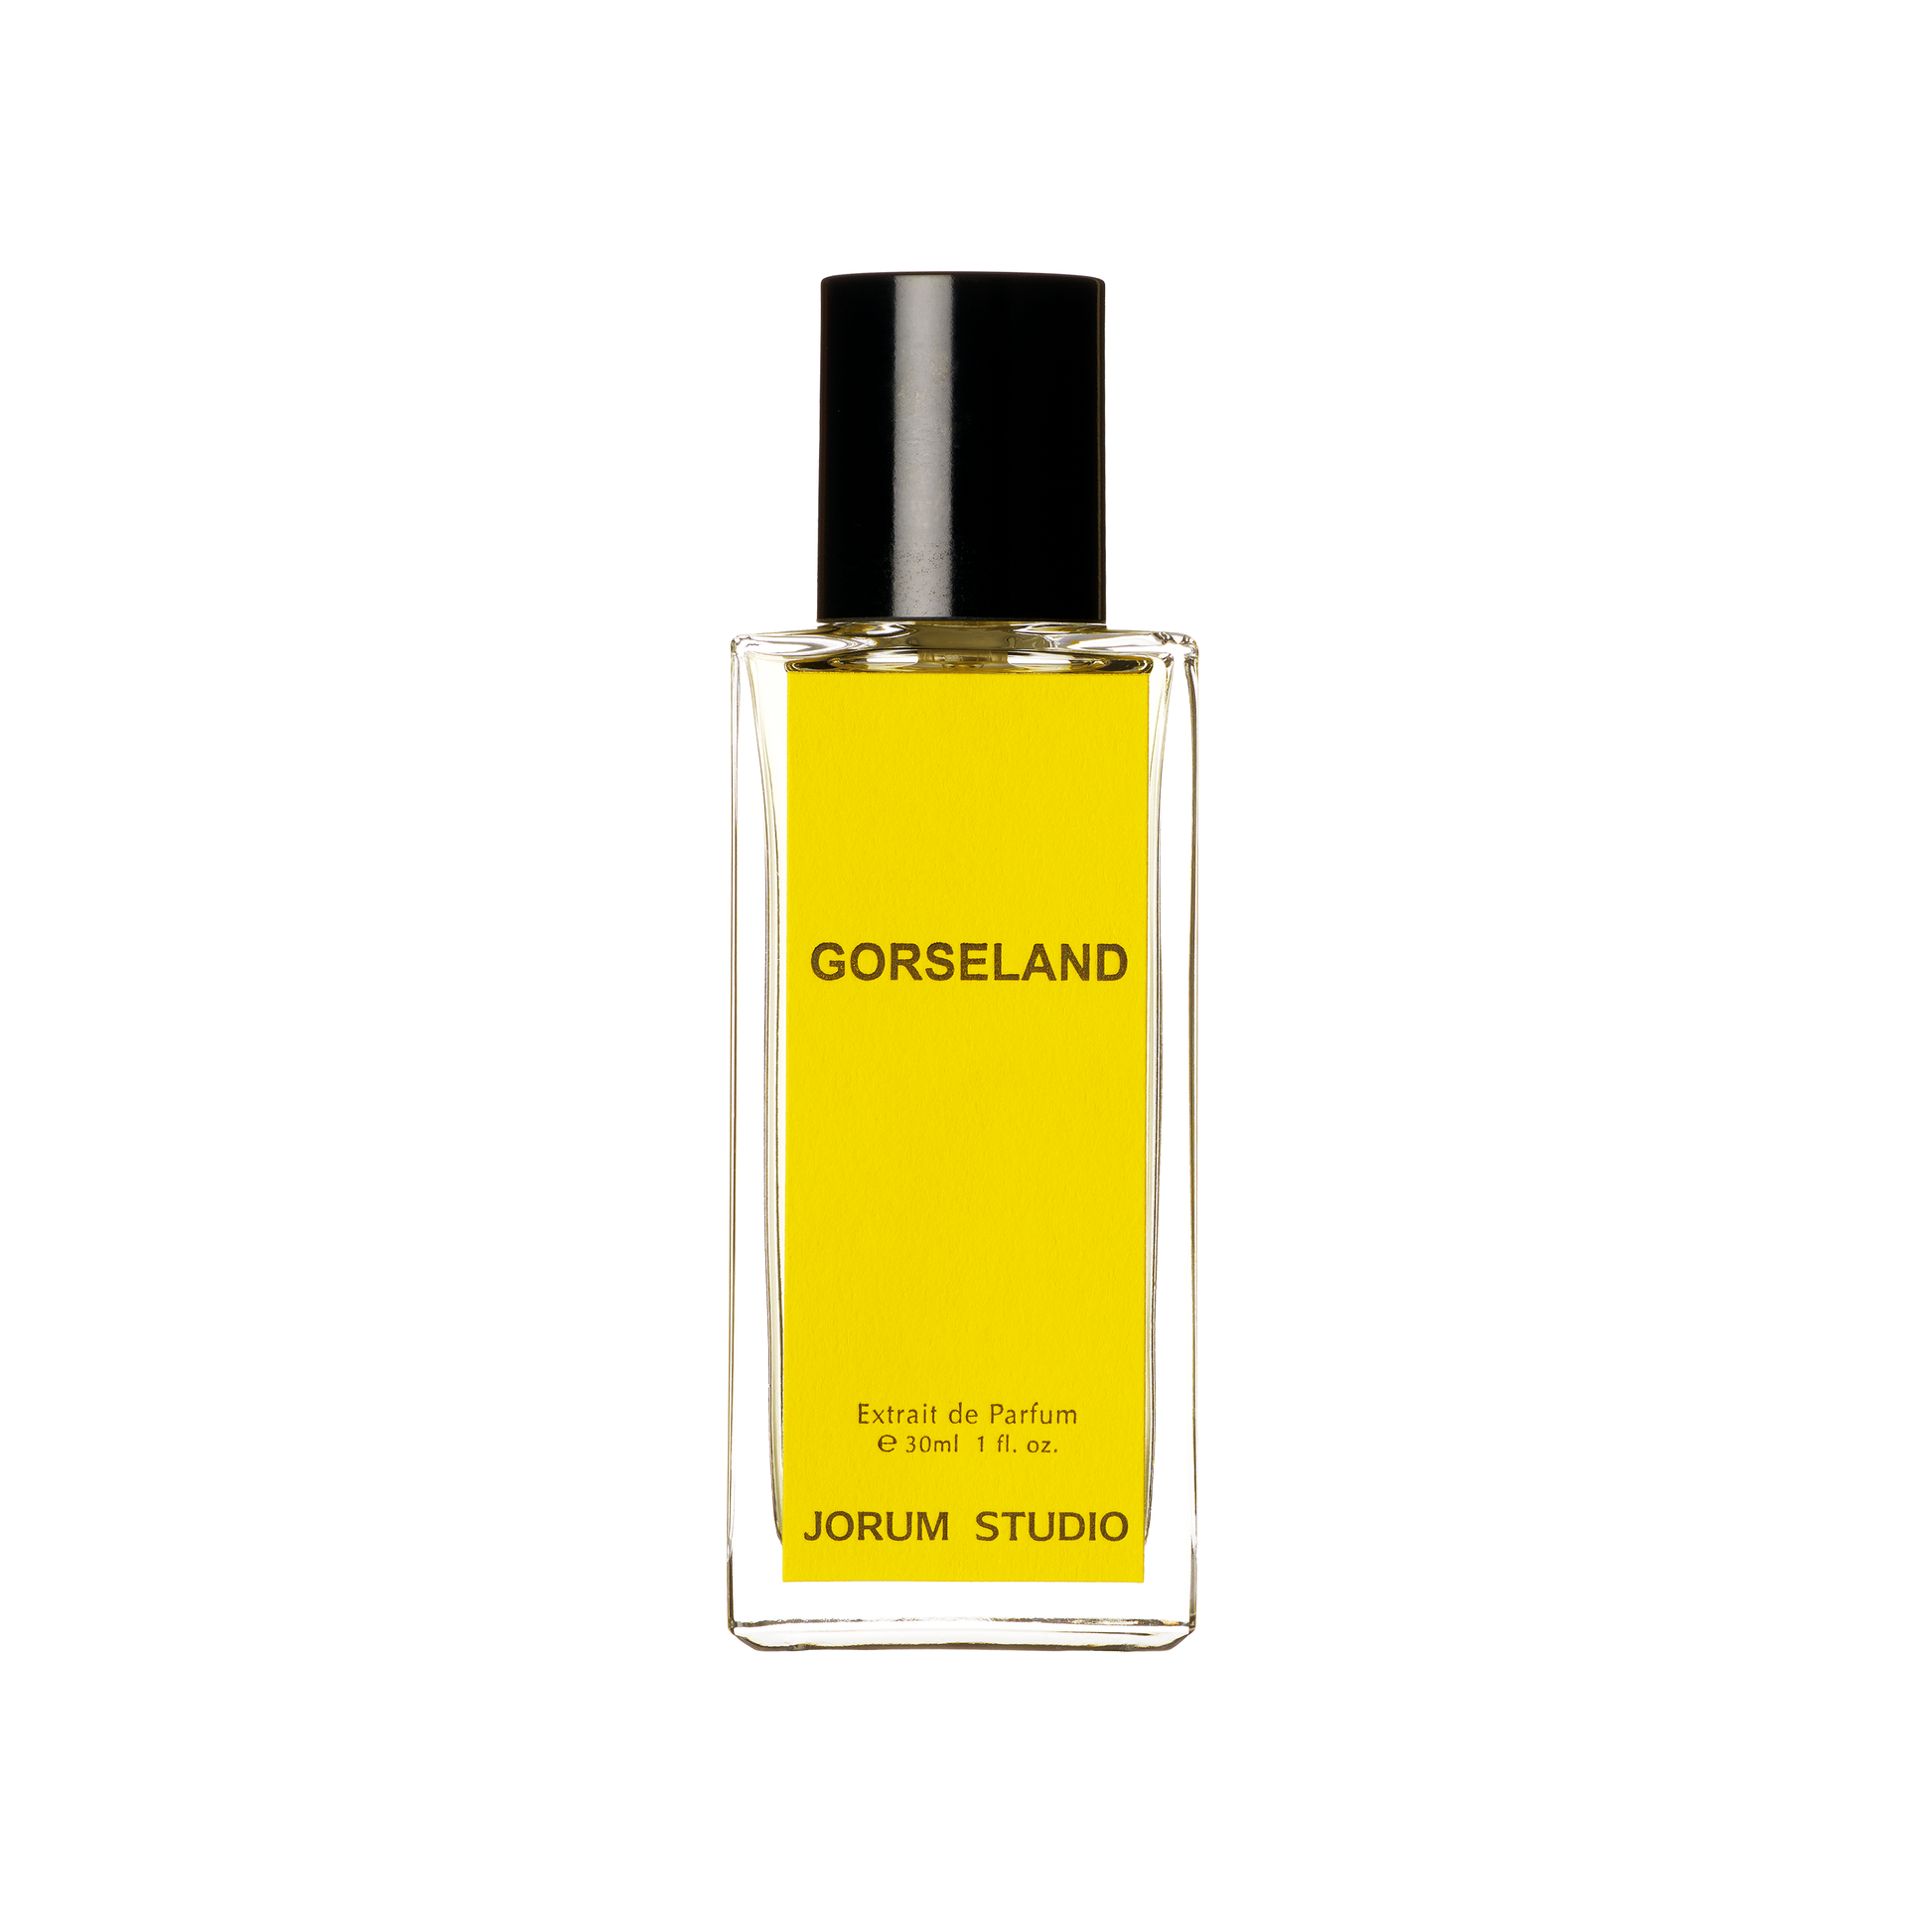 30ml bottle of Gorseland Extrait de Parfum by independent Scottish perfumers Jorum Studio, the bottle has a yellow label